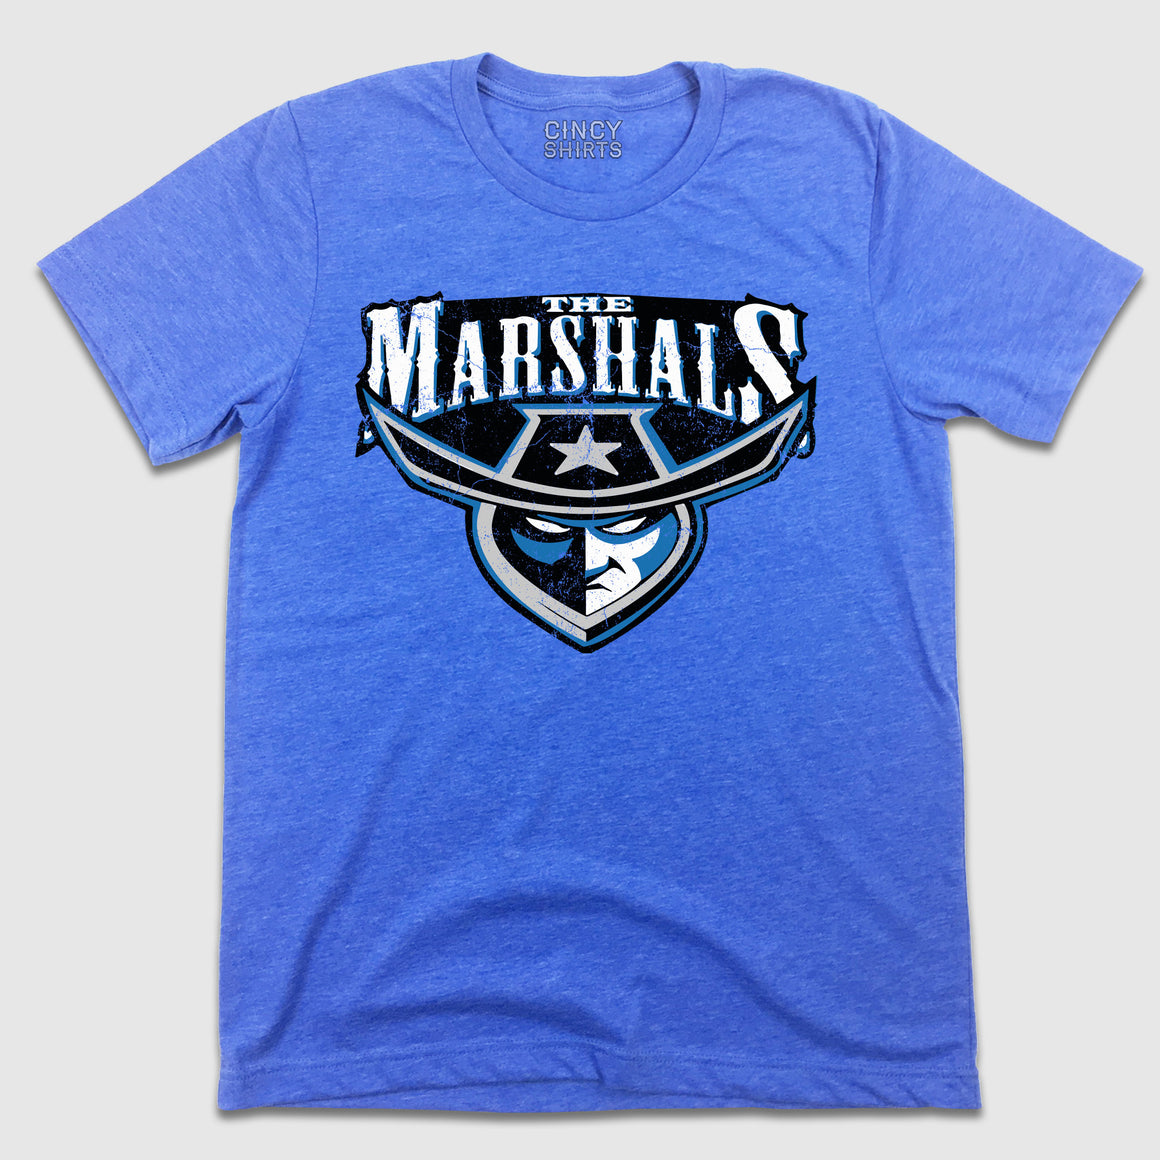 The Marshals - Cincy Shirts